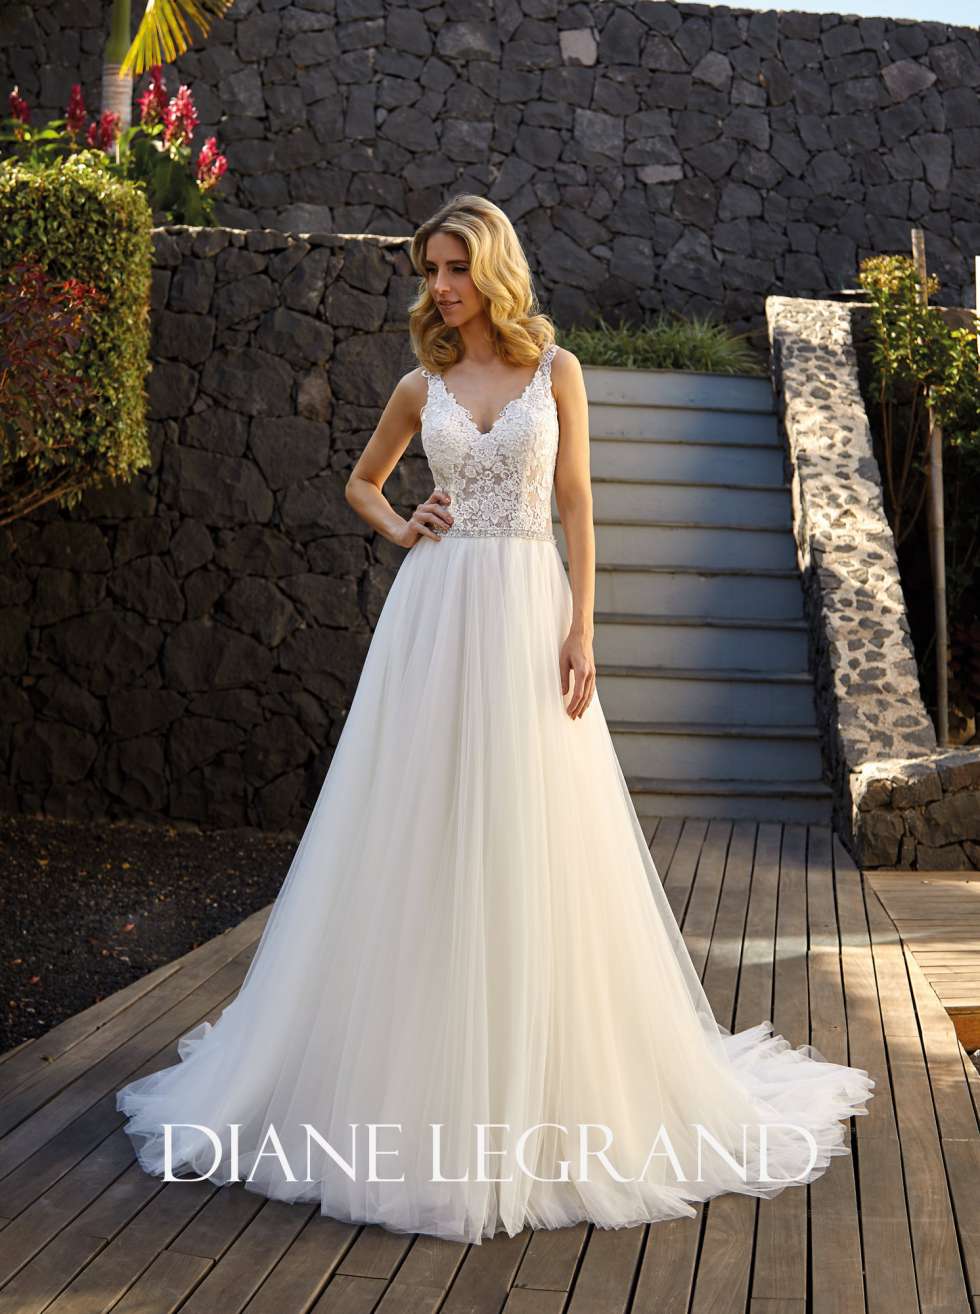 The Beautiful 2019 Wedding Dresses by Diane Legrand